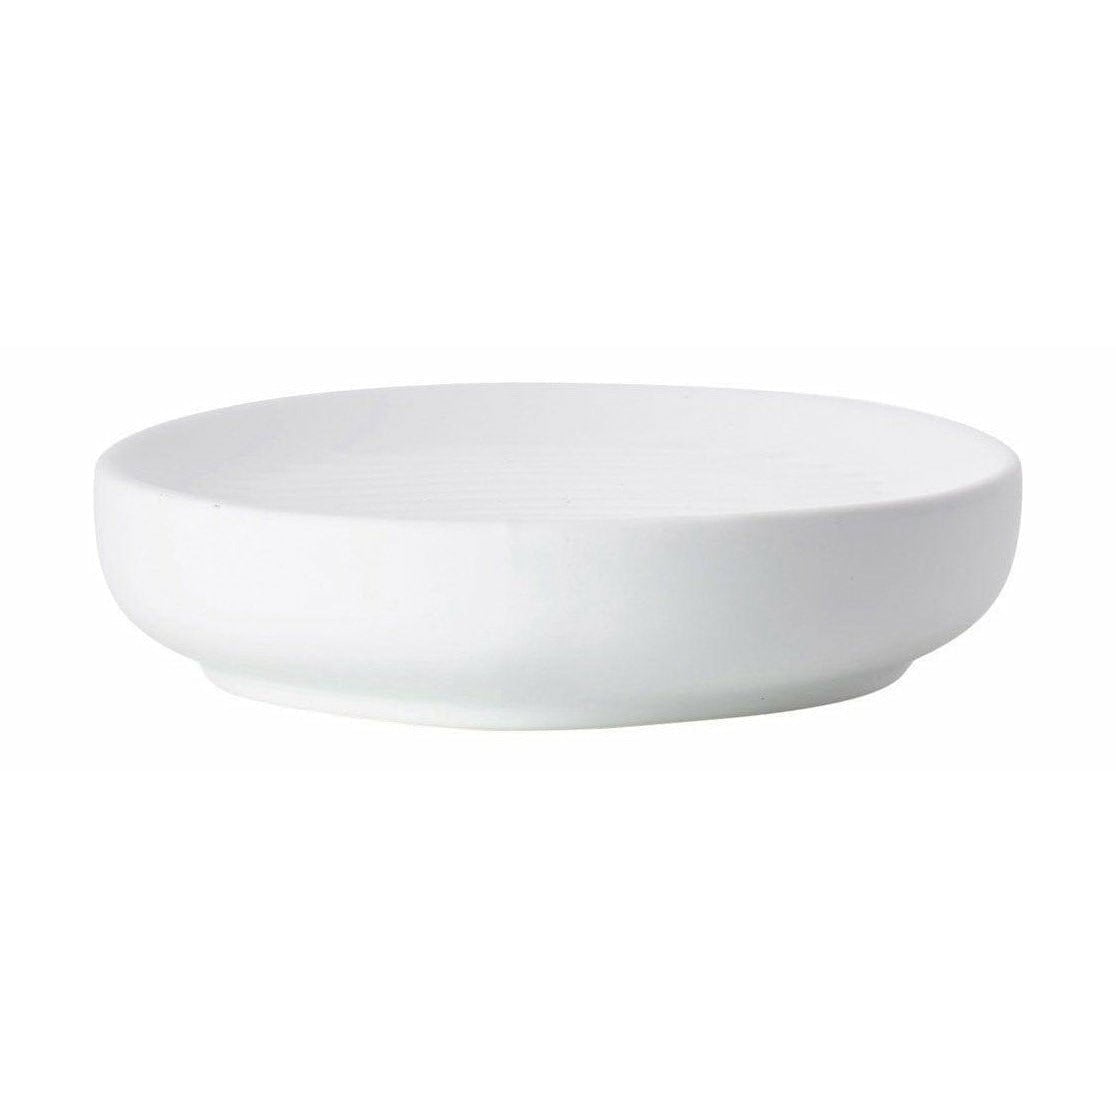 Zone Denmark Ume Soap Dish, White